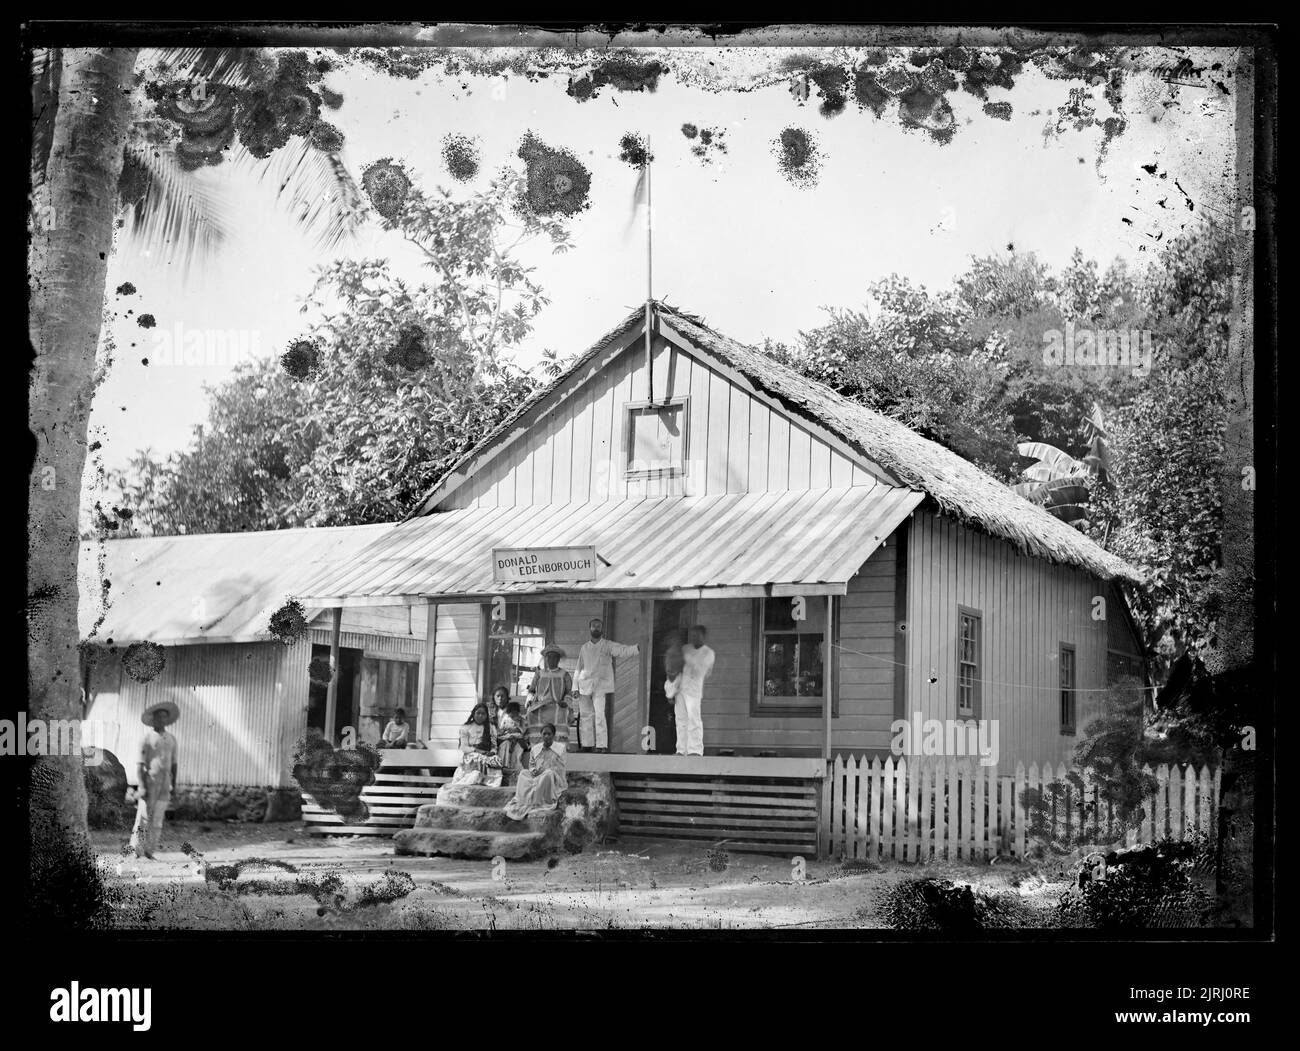 Donald y Edenborough Trading House, alrededor de 1914, Islas Cook, por George Crummer. Foto de stock